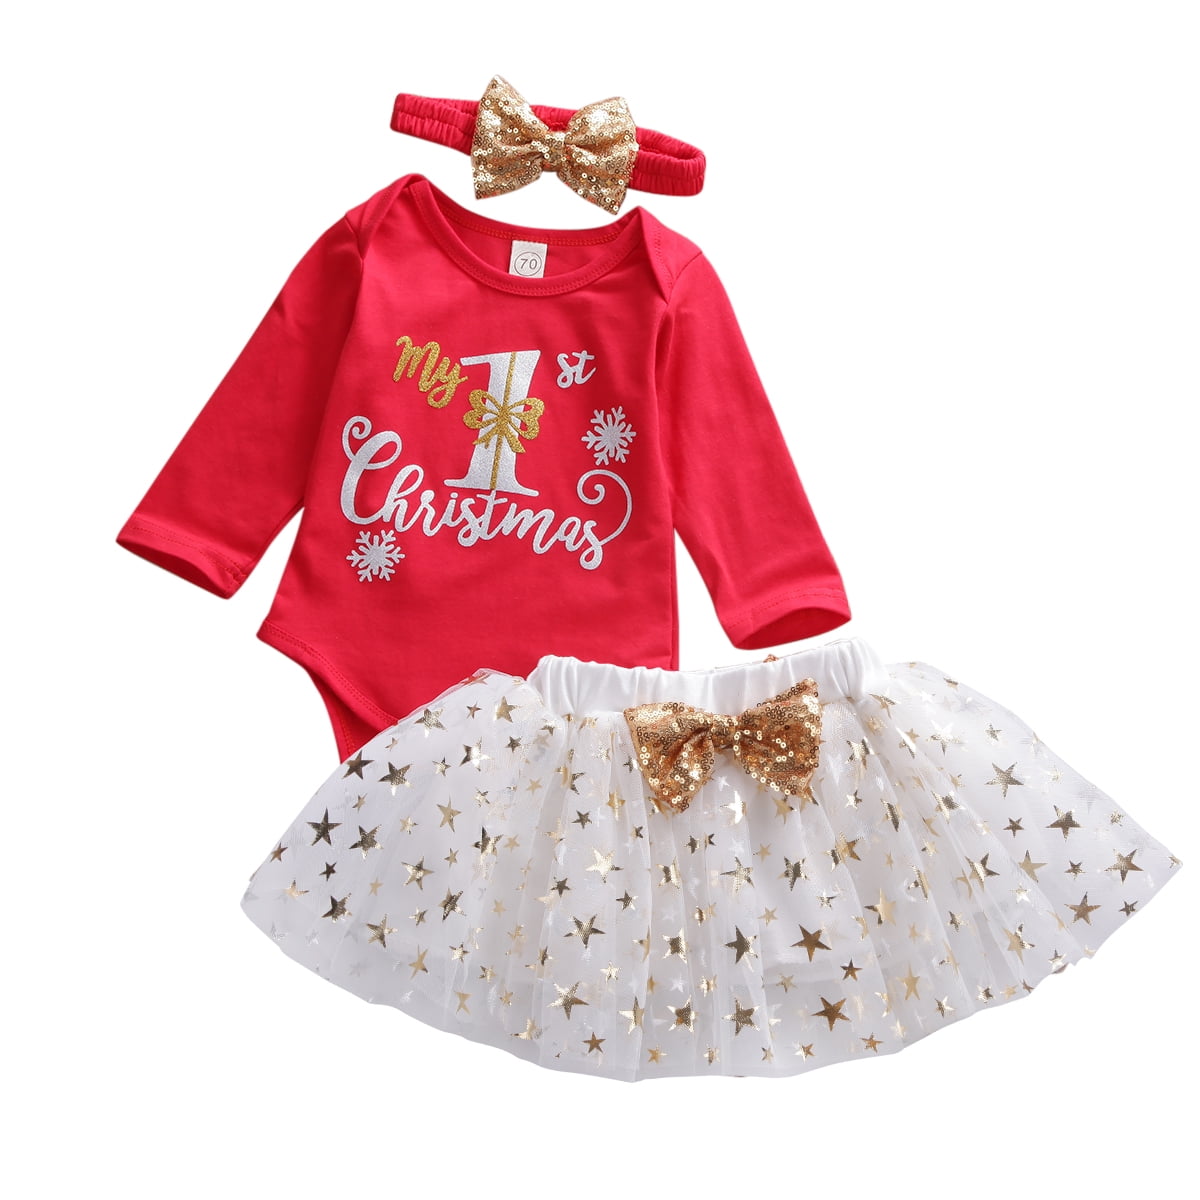 US Baby Girls Christmas Outfit Tops Polka Dot Tutu Leggings Skirt Party Costume 